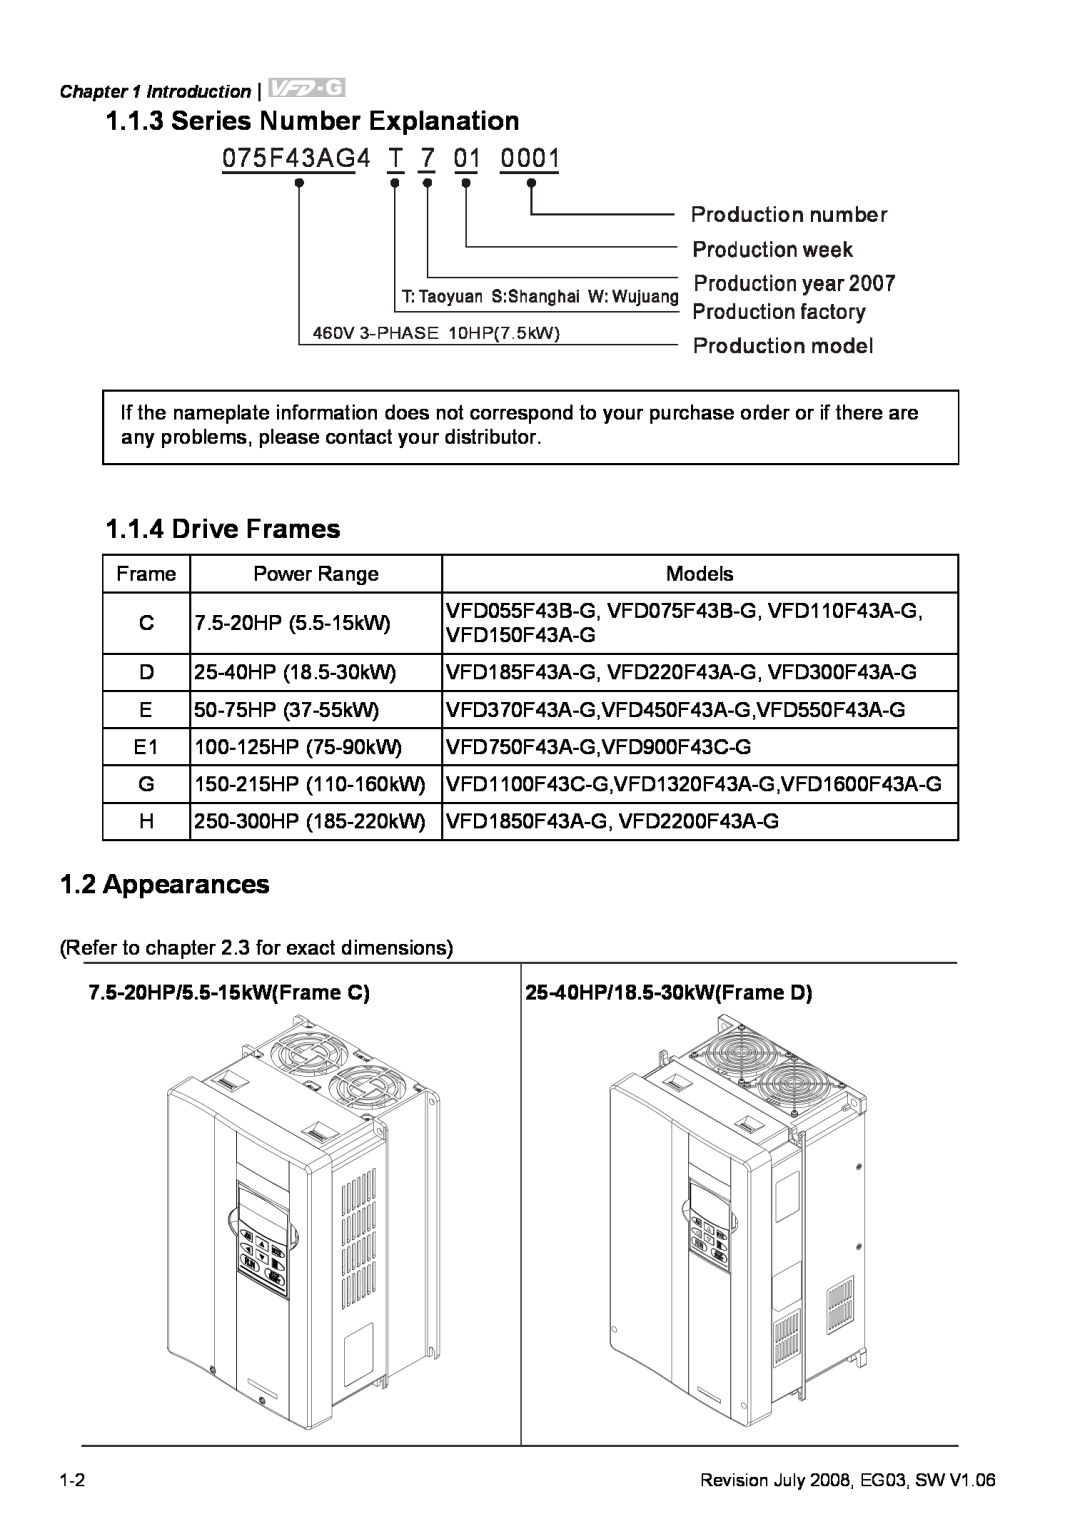 Delta Electronics VFD-G manual Series Number Explanation, 075F43AG4 T 7 01, Drive Frames, Appearances, Production model 